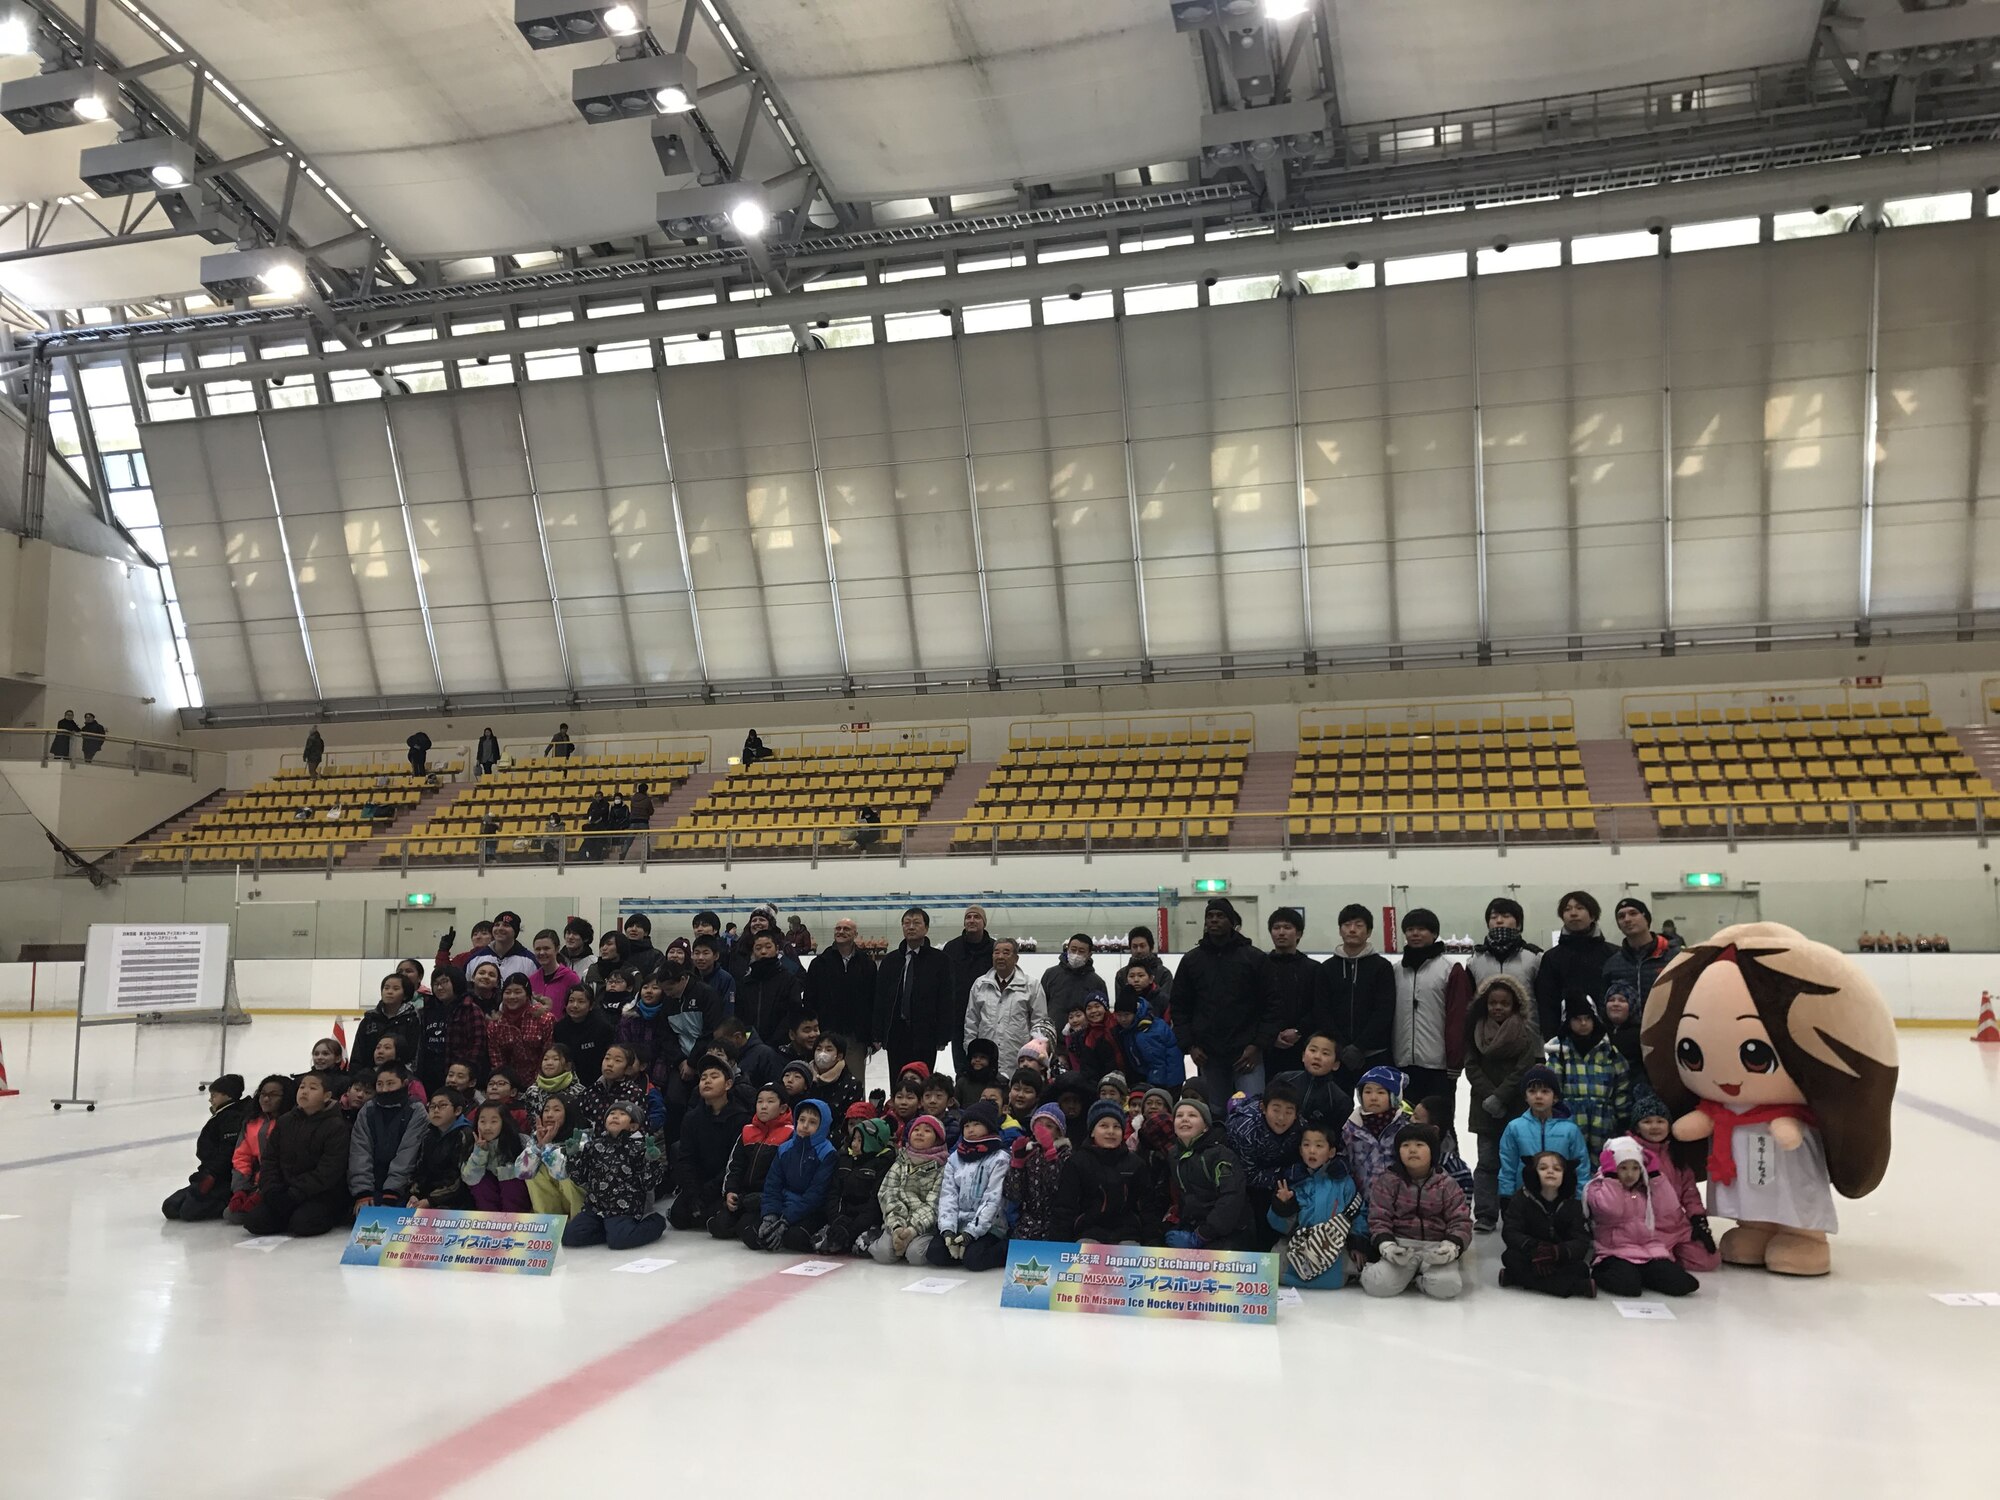 Misawa City and Misawa Air Base kids compete in the 6th Misawa Ice Hockey Exhibition at the Misawa International Center Ice Hockey Arena, Japan, Jan. 27, 2018.